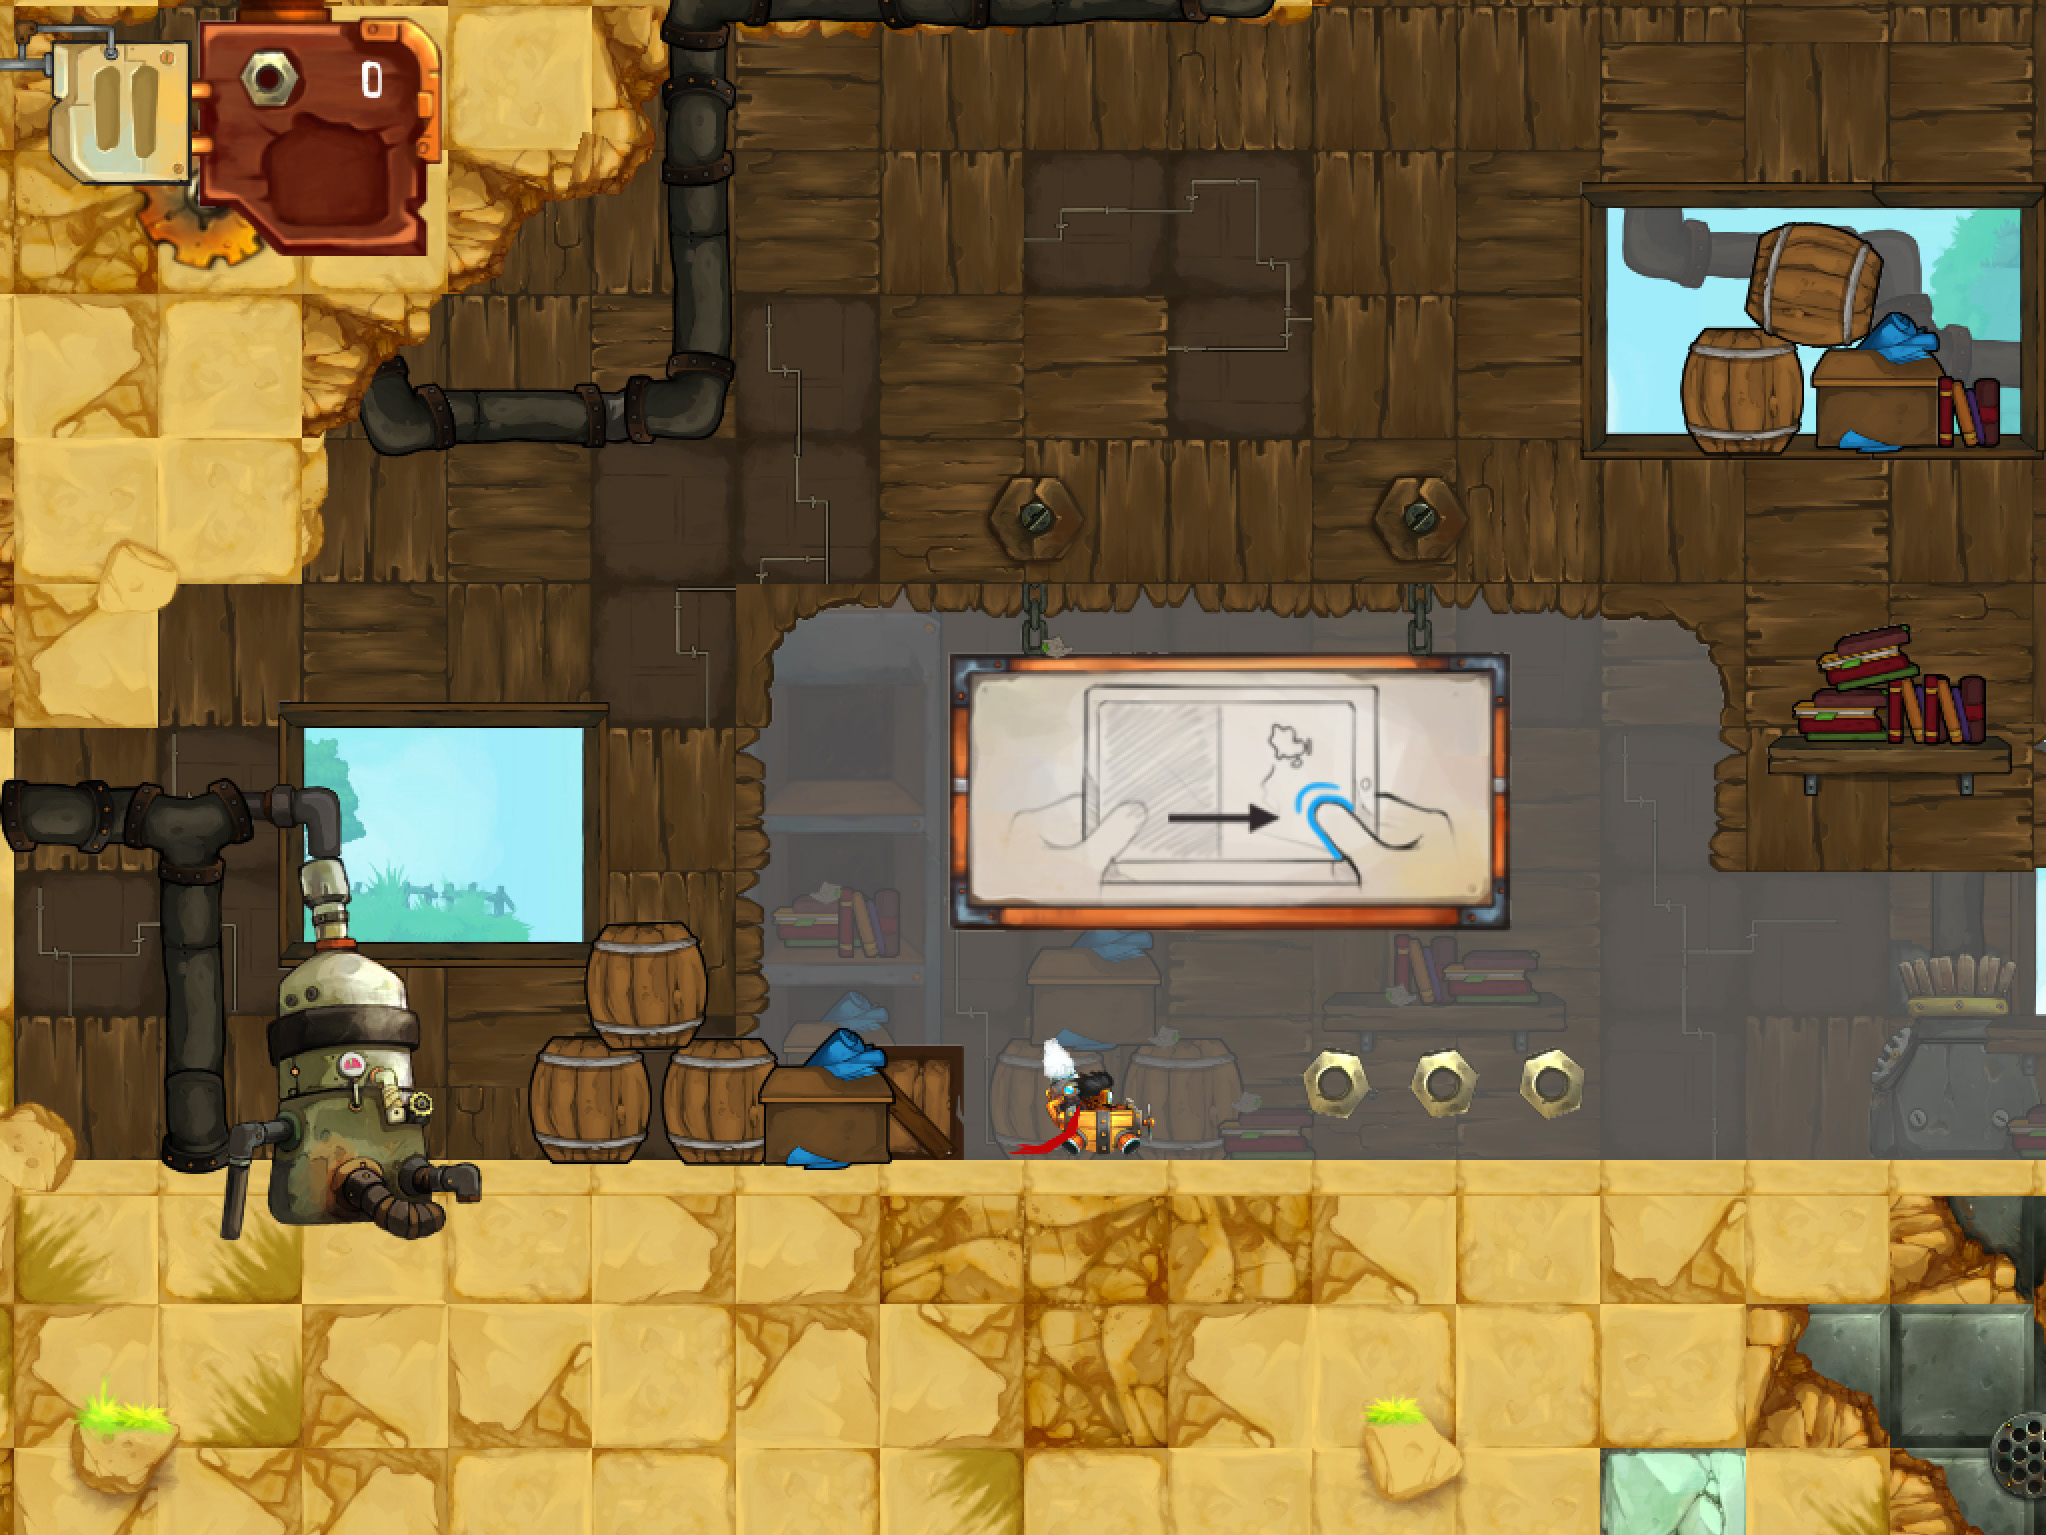 In-game screenshot of tutorial area